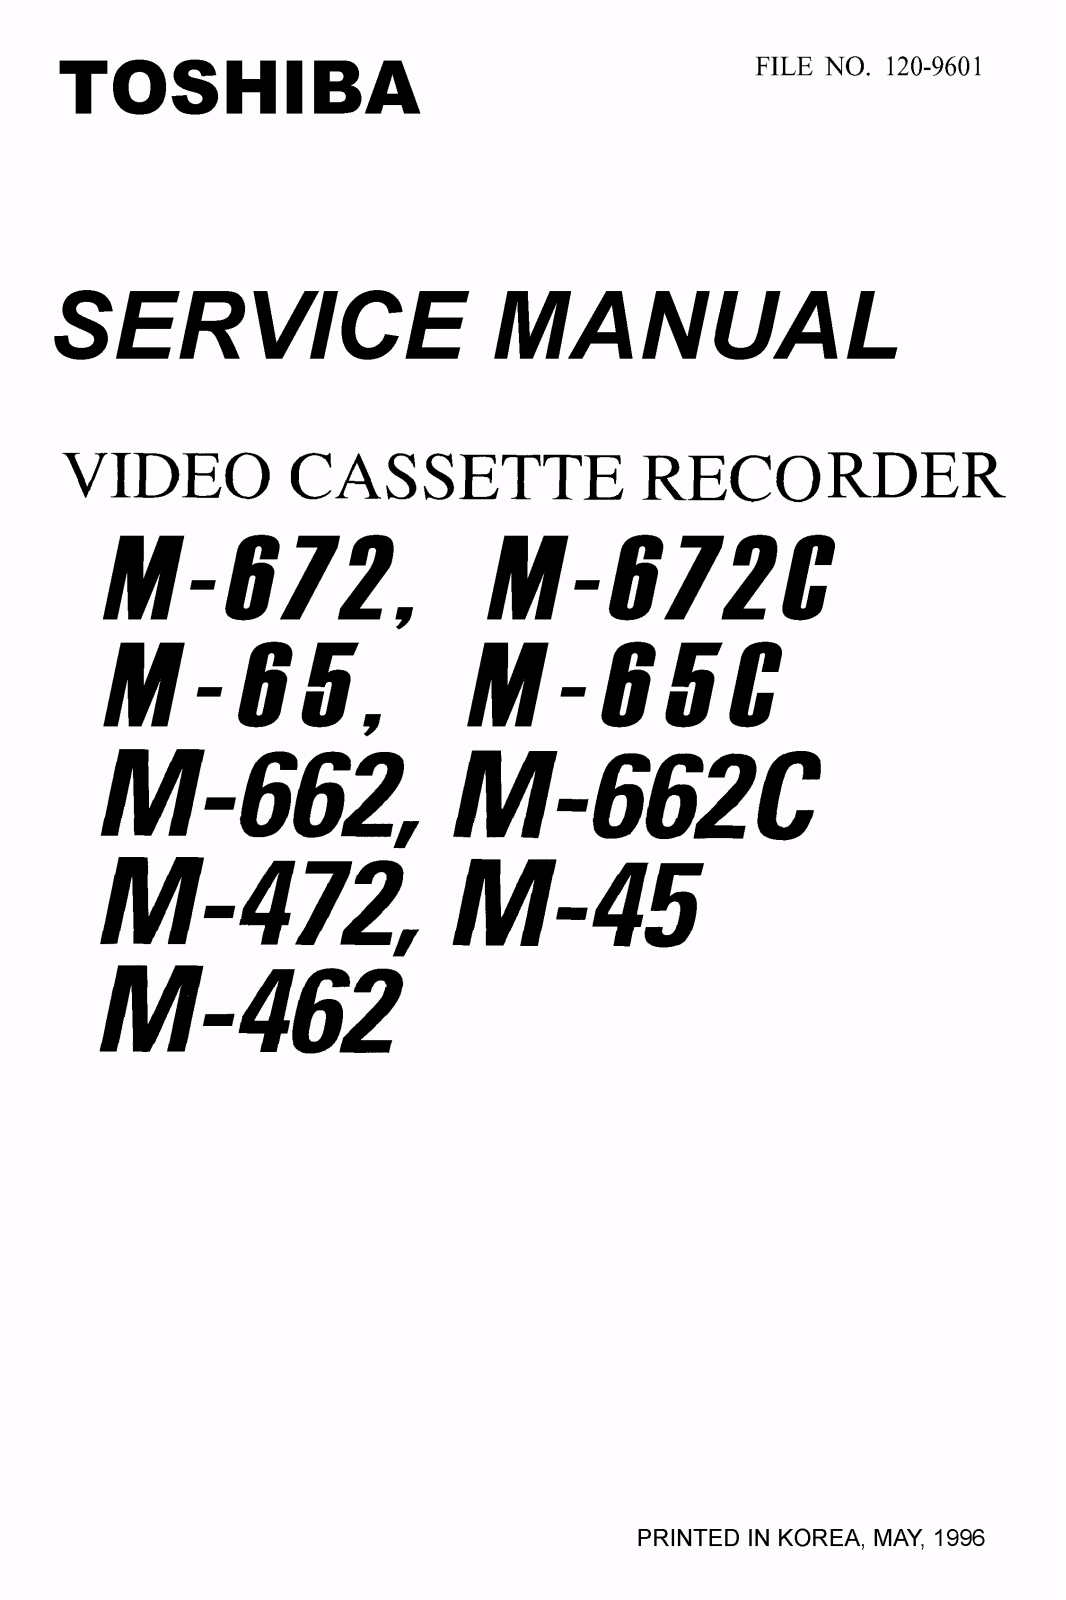 Toshiba M-45, M-462, M-65, M-472, M-65-C Service manual